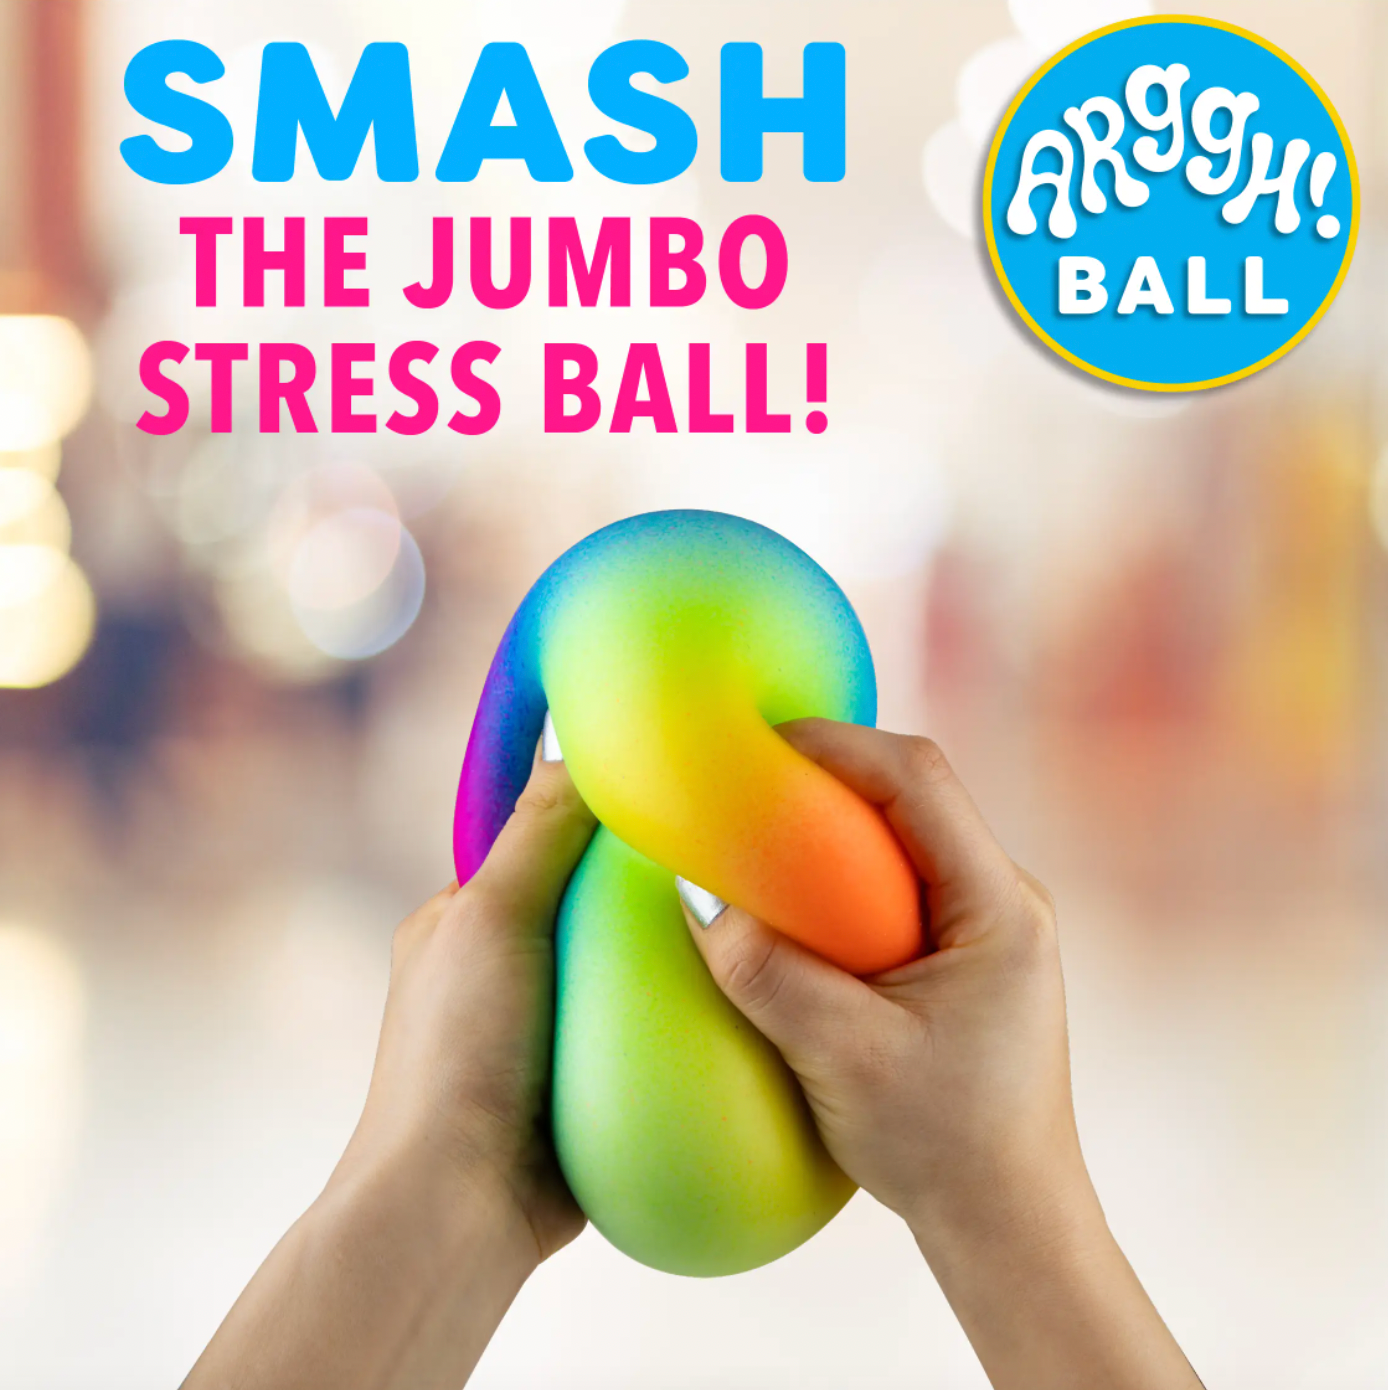 Arggh! Rainbow Fidget Ball | Large Sensory Stress Ball